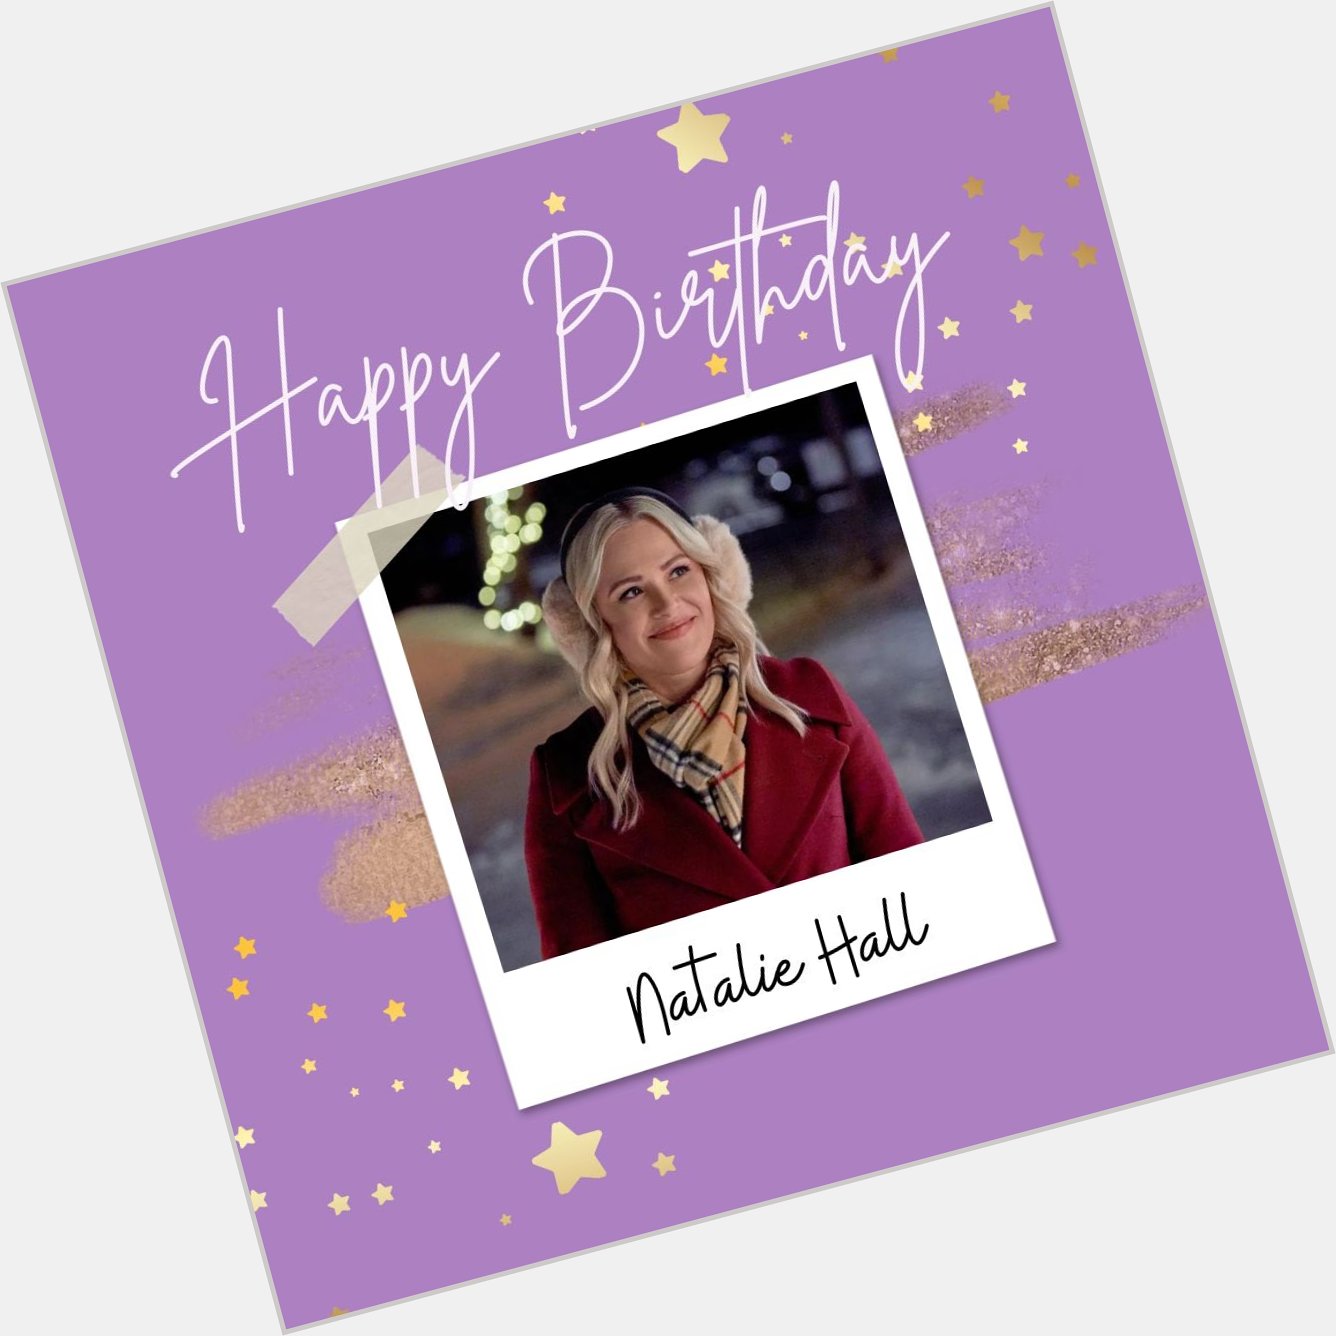 Happy Birthday Natalie Hall!  